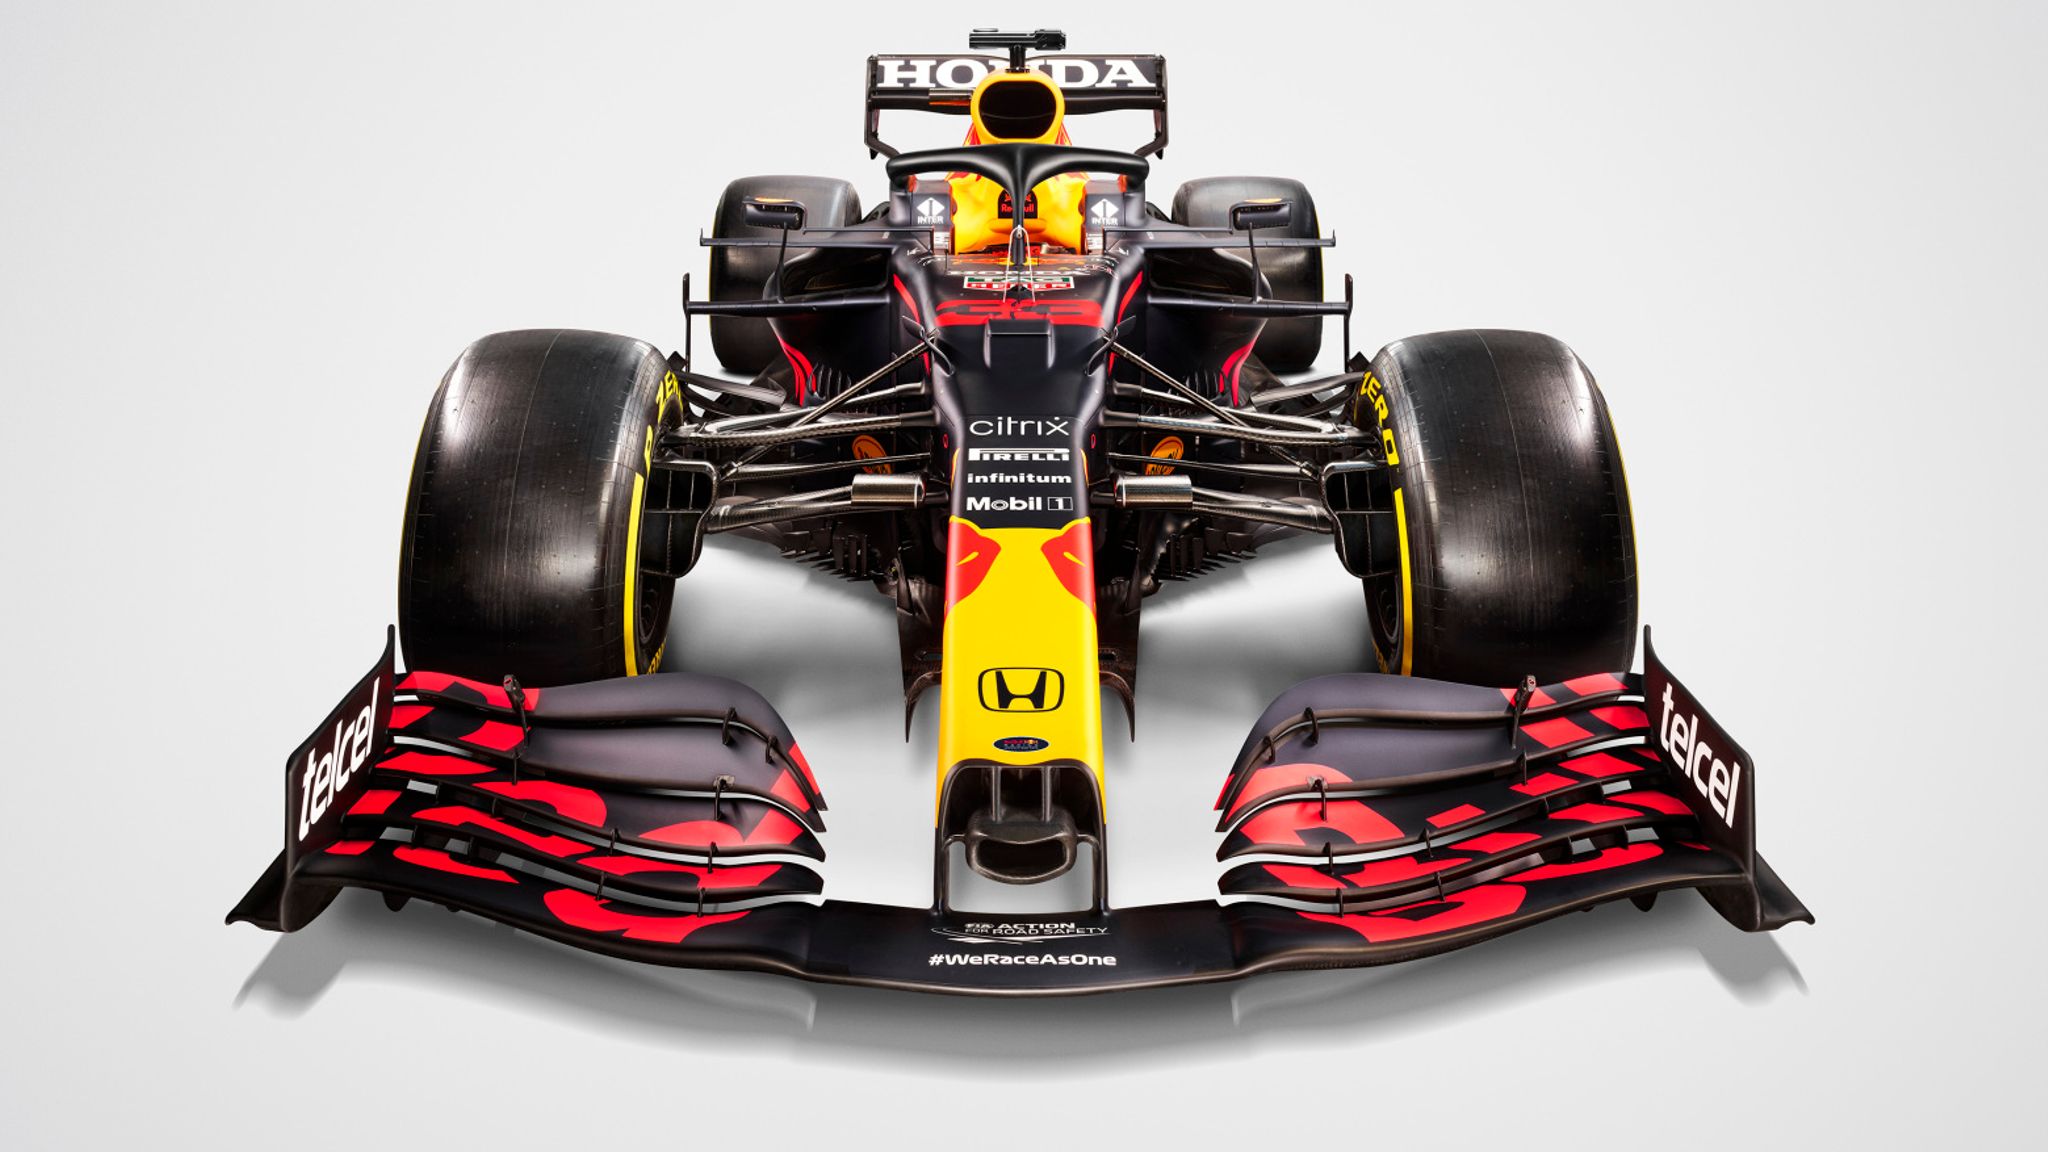 Brobrygge Minimer Fremhævet Red Bull launch 2021 car, the RB16B, as team bid to end Mercedes' Formula 1  title streak | F1 News